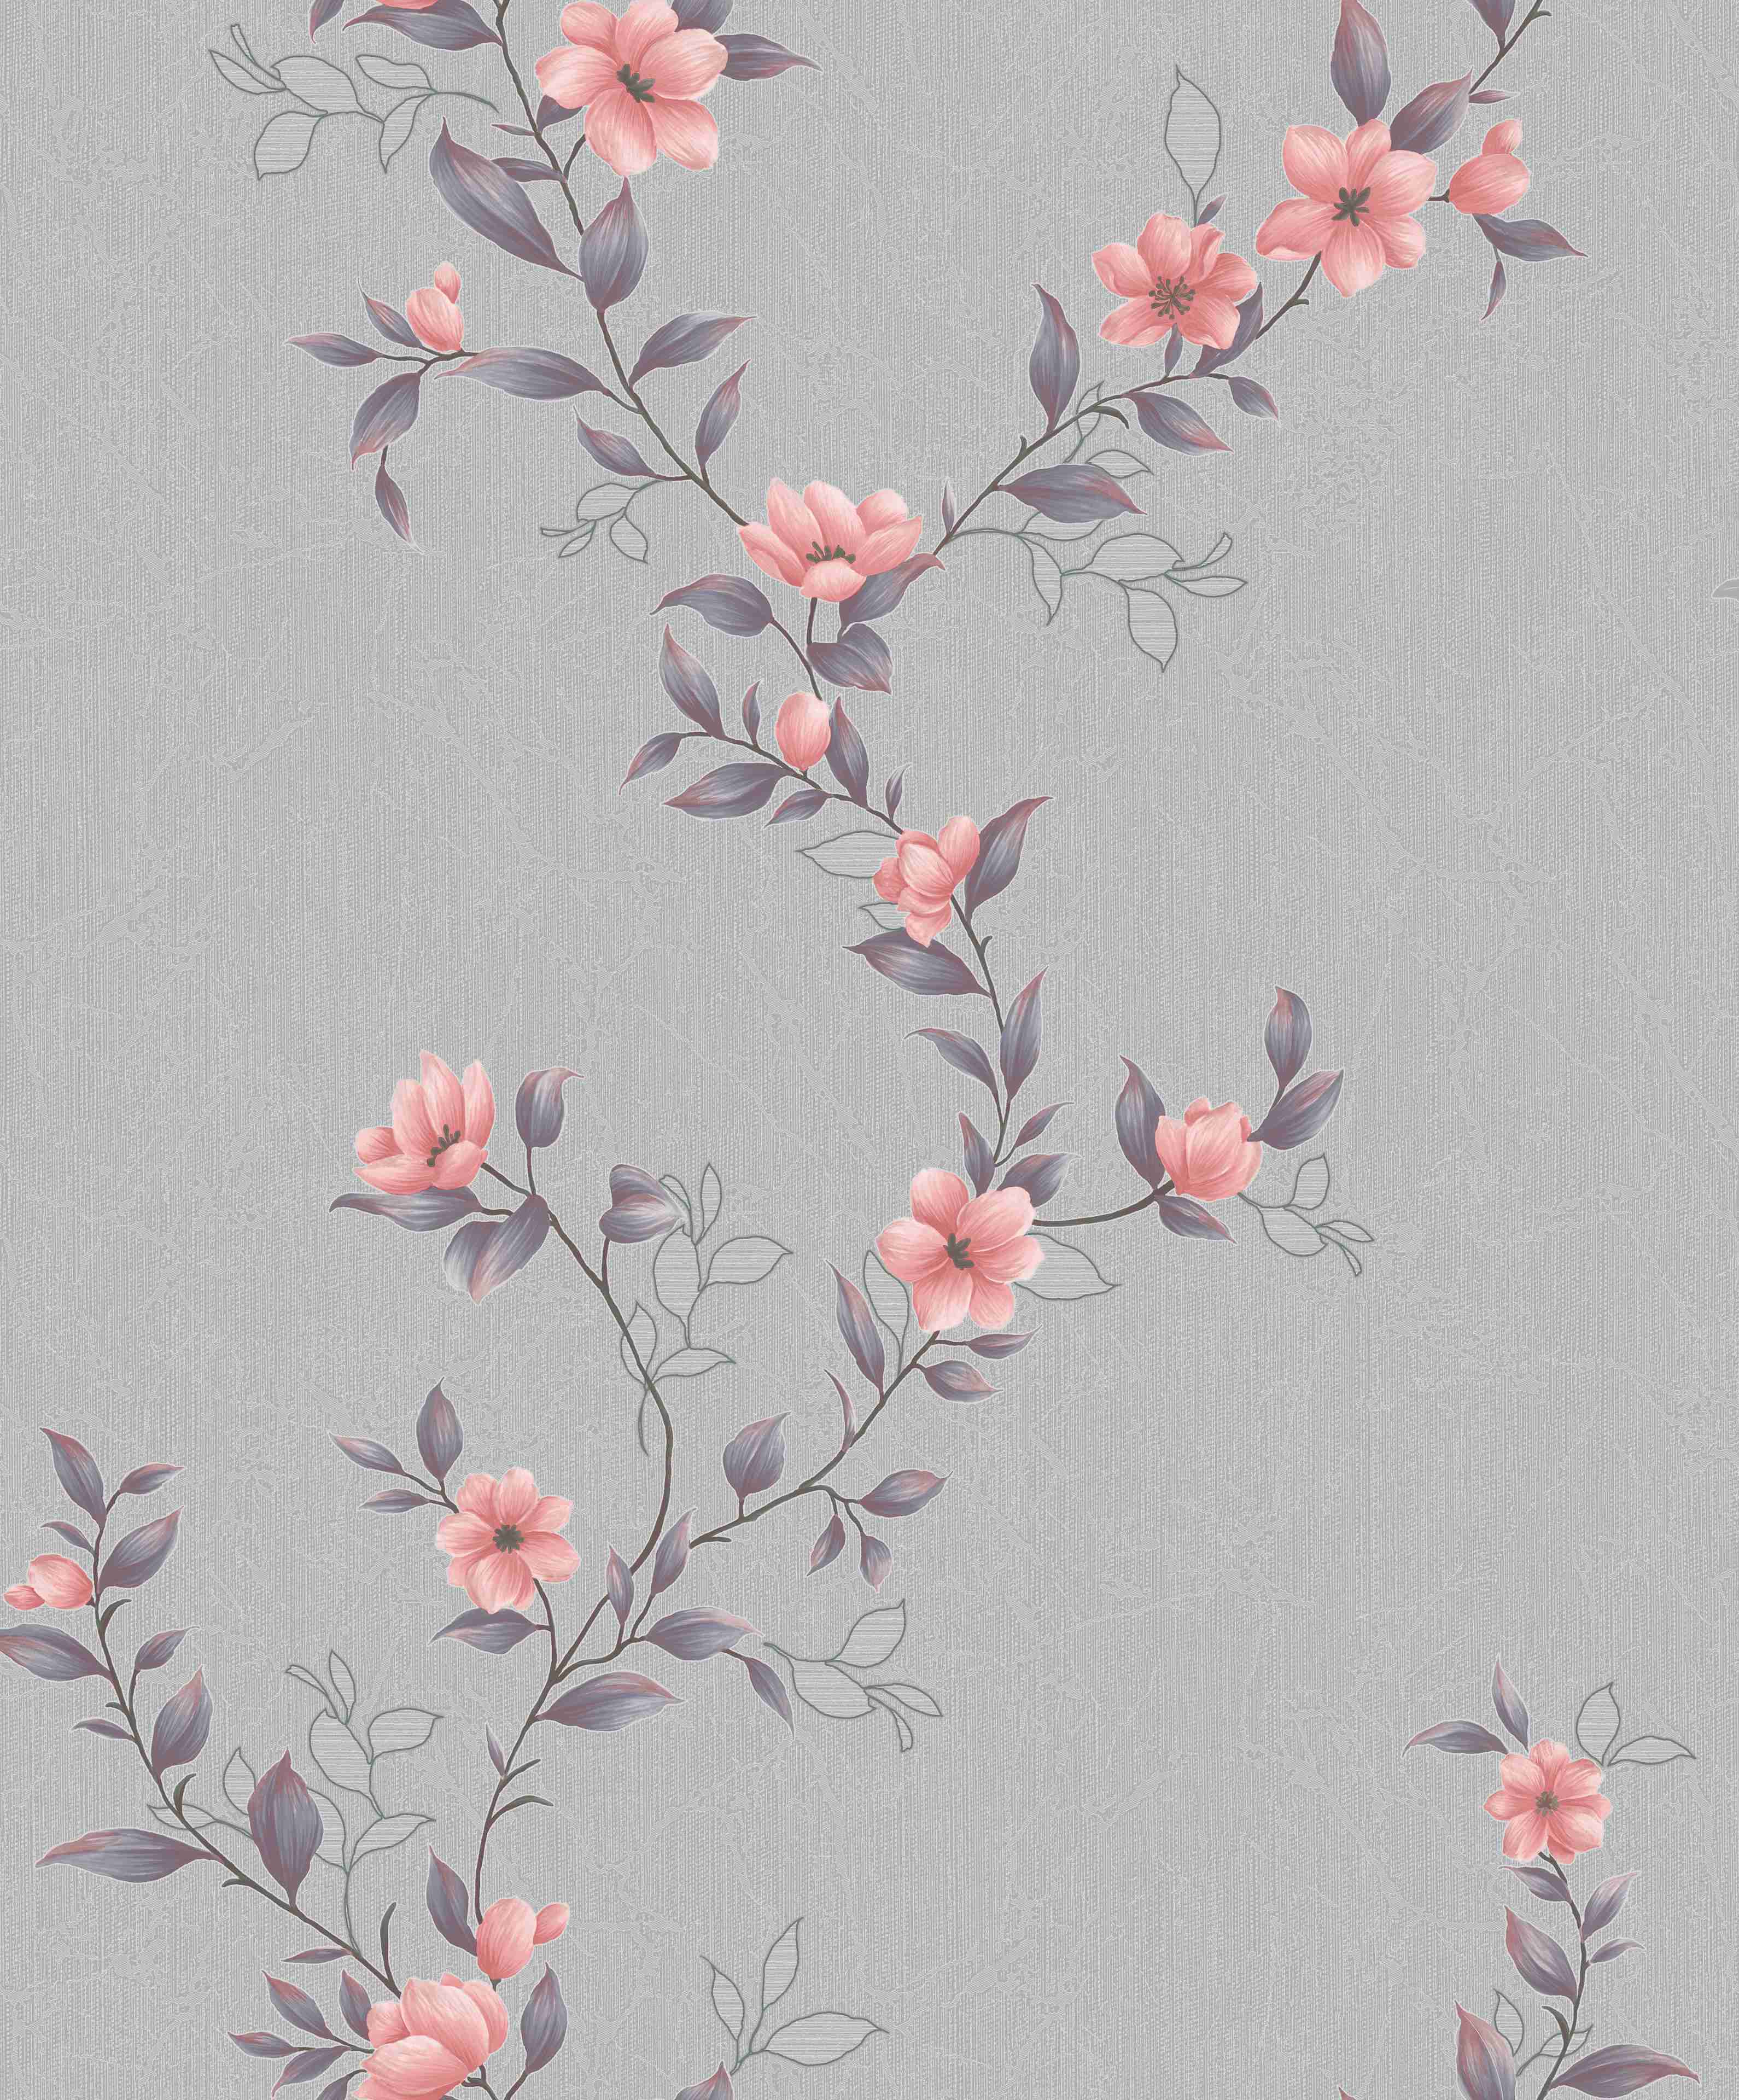 New pvc wallpaper 2020 flower design Featured Image